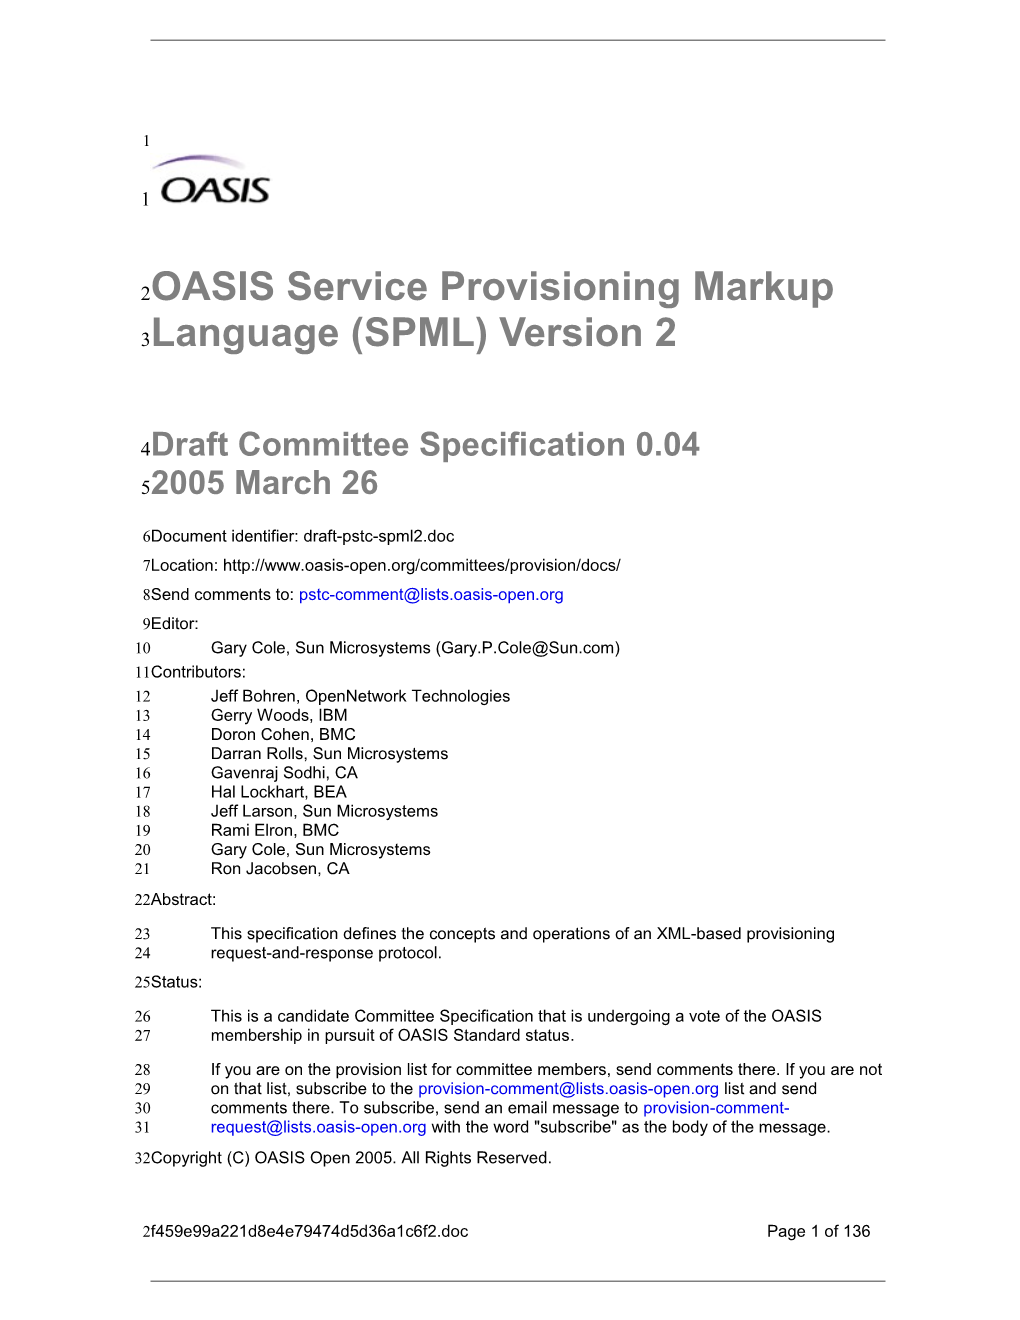 OASIS Service Provisioning Markup Language (SPML) Version 2